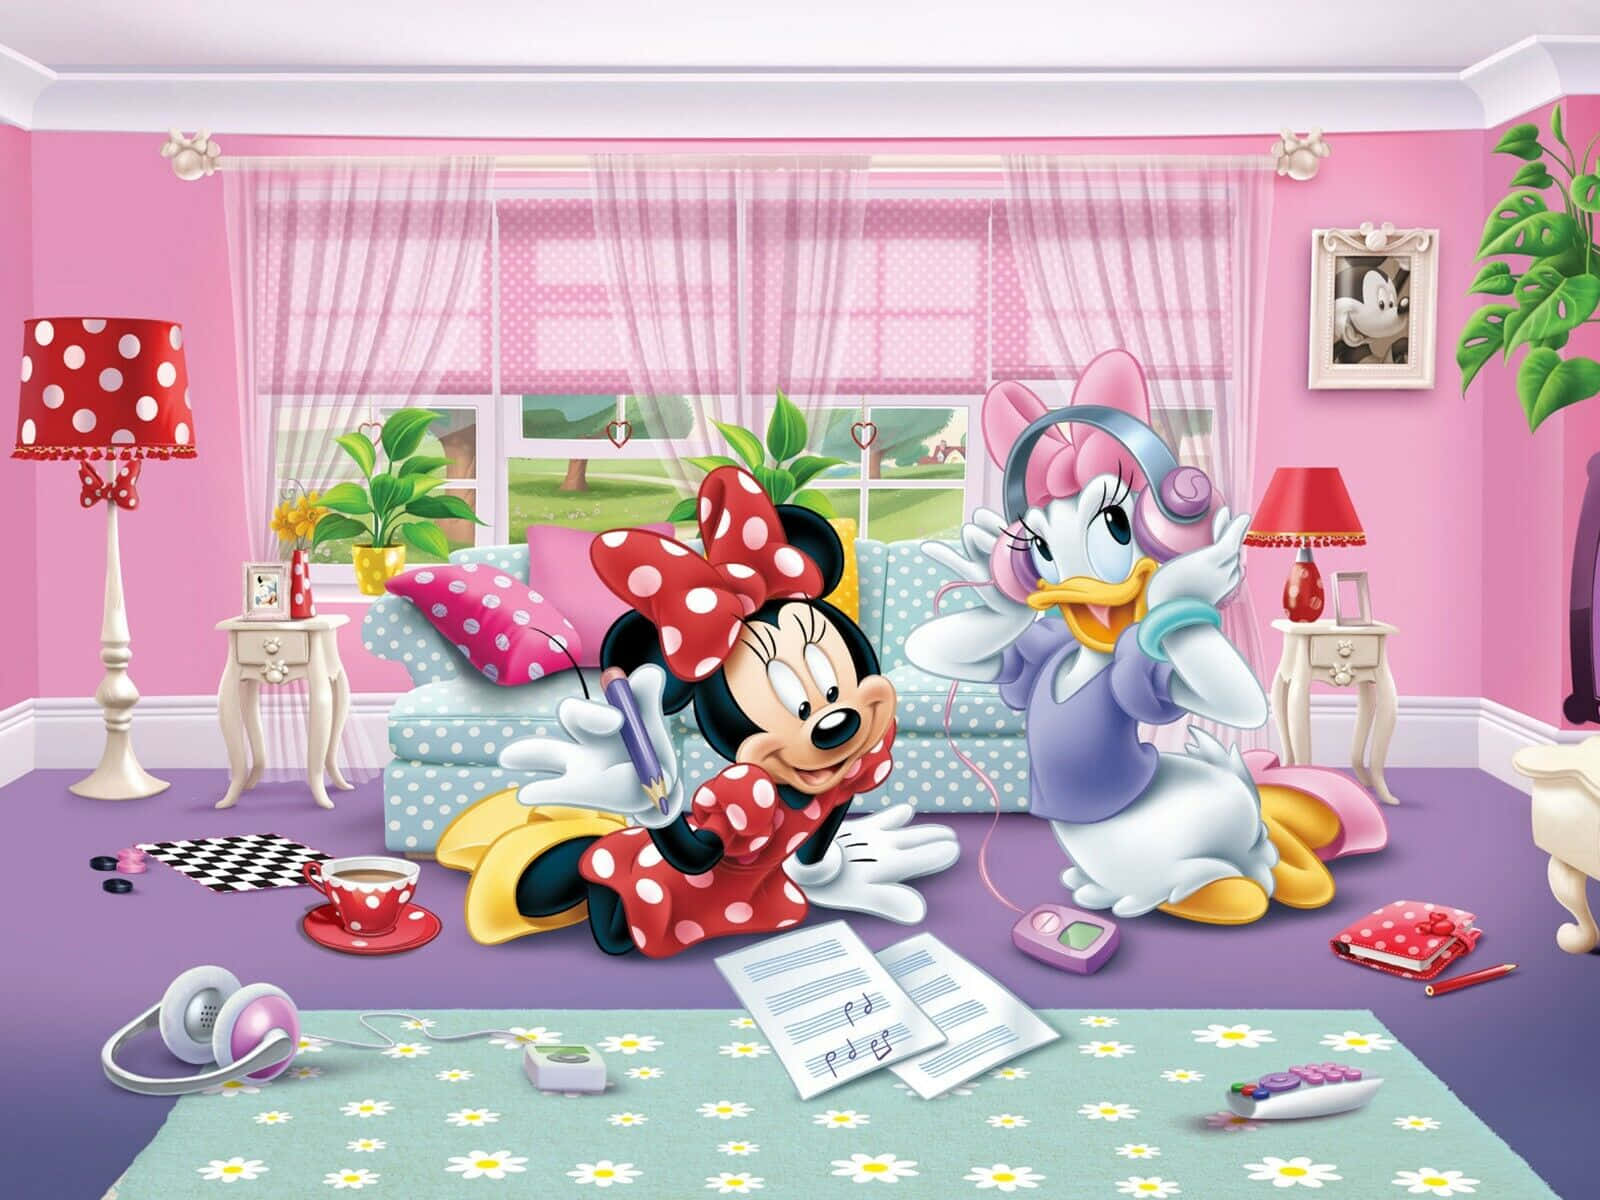 Minniemouse, Icona Amata Disney!